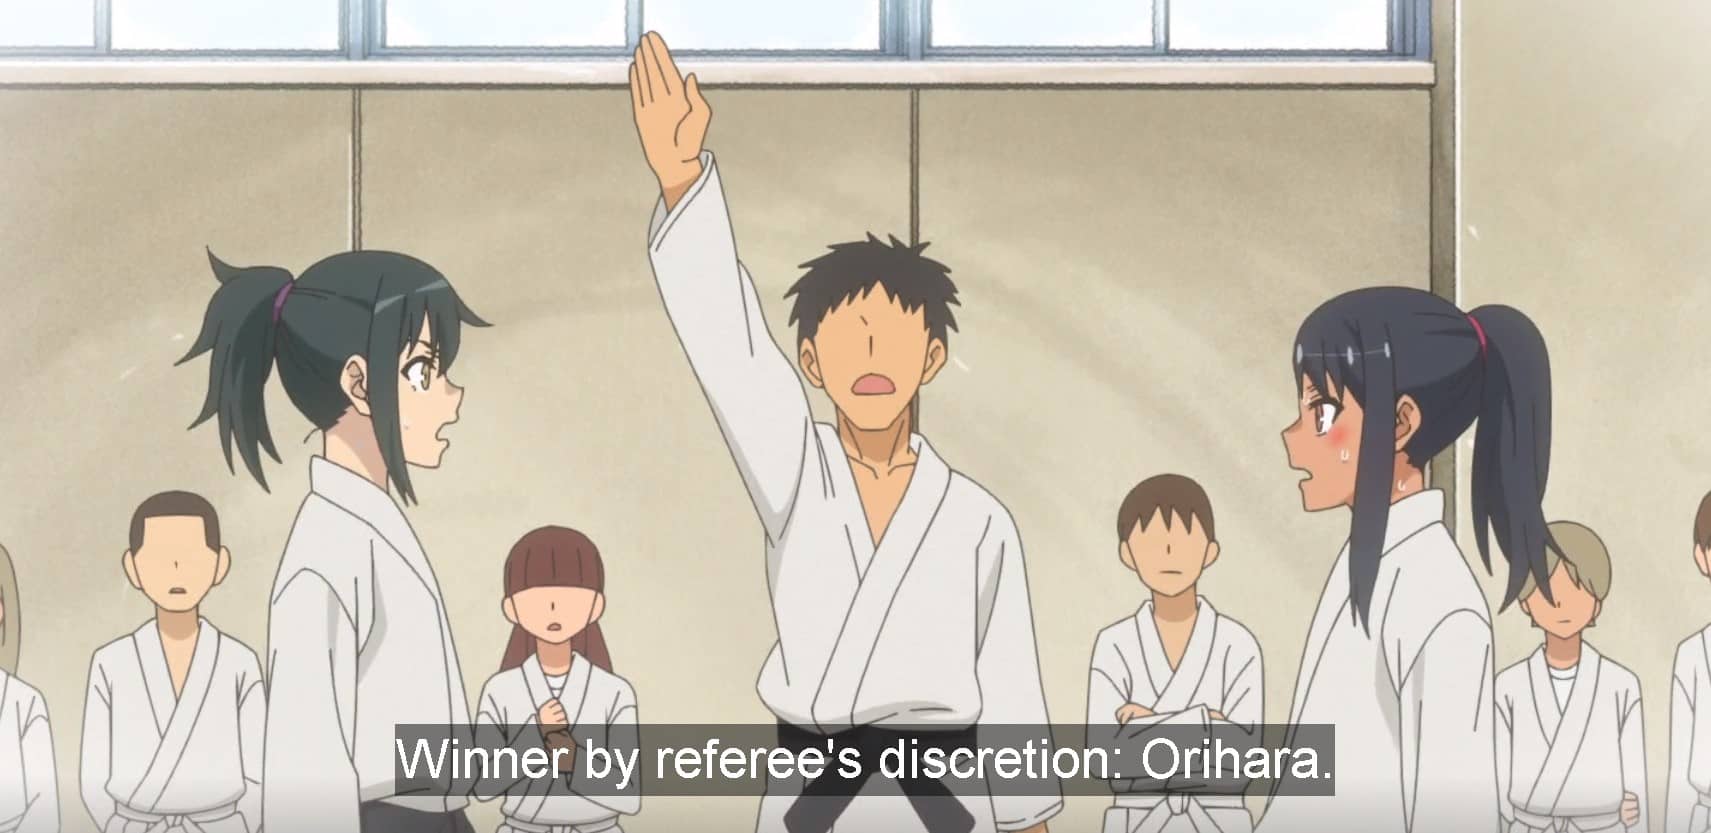 Orihara - the winner